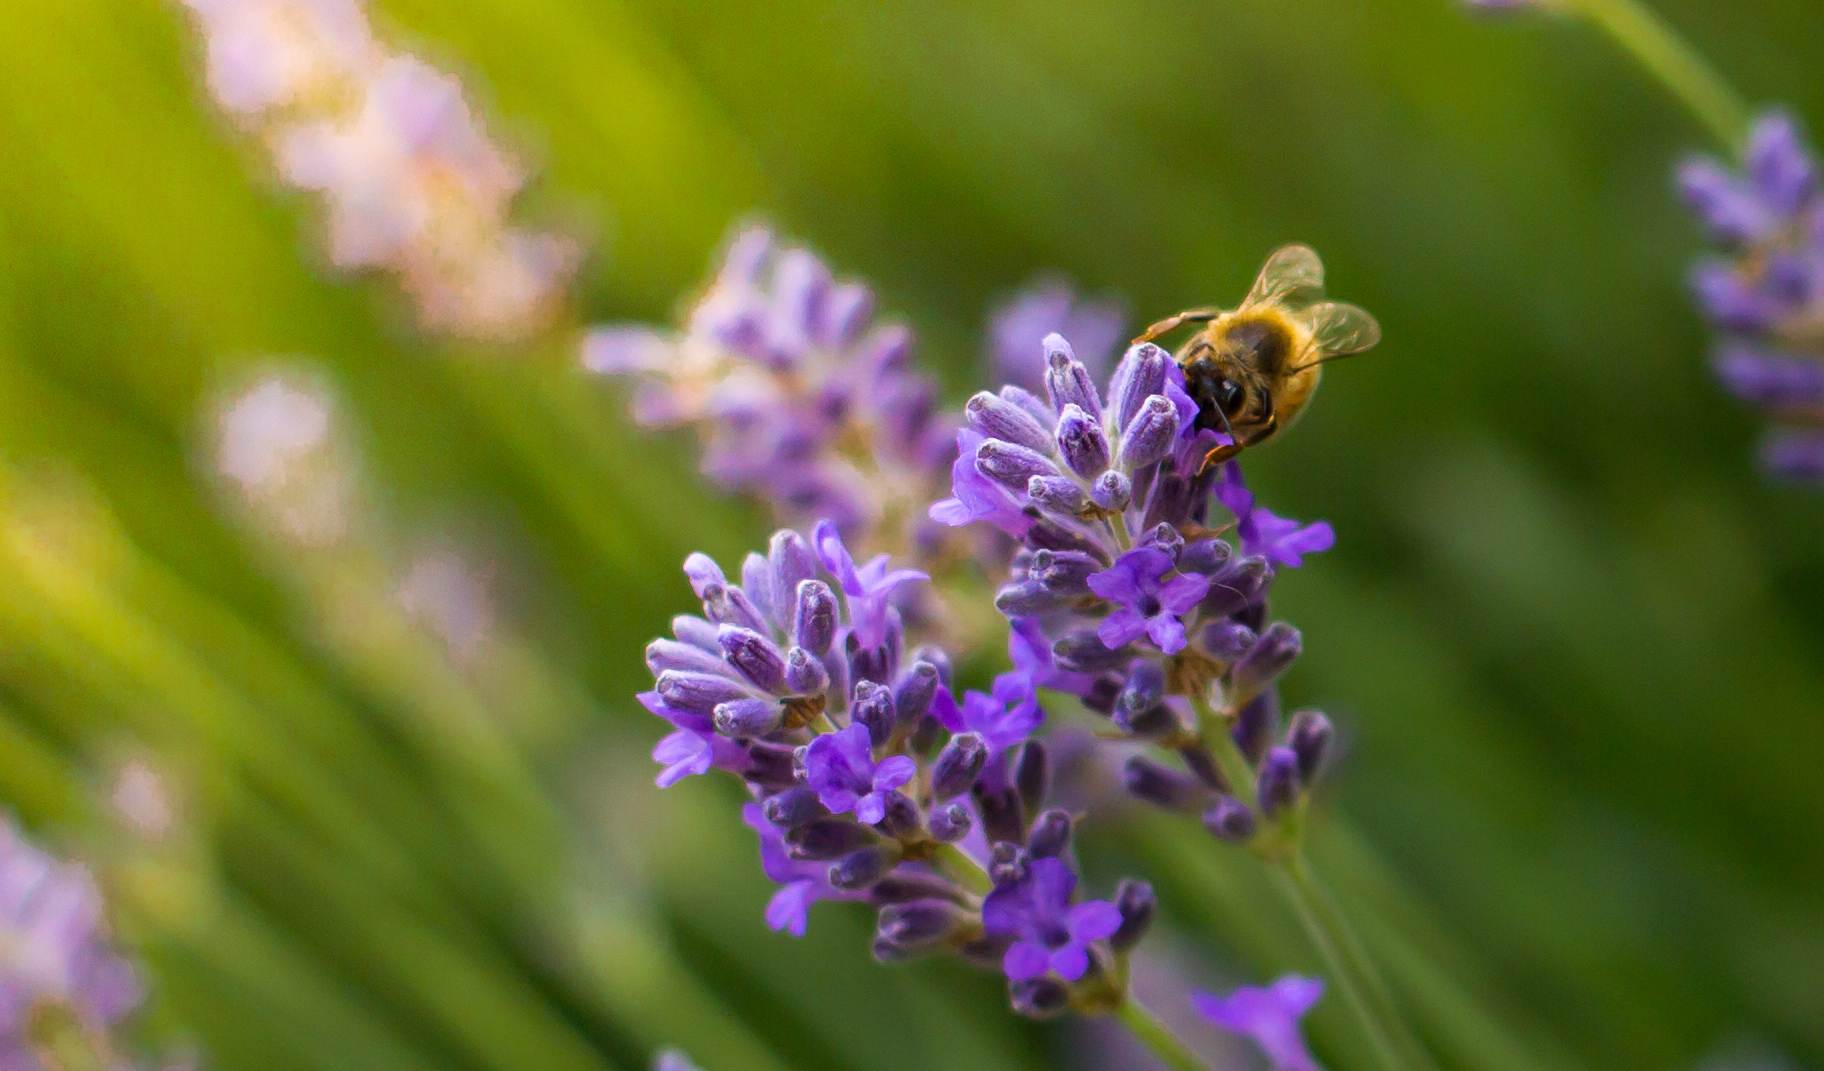 Bee on lavender.jpg  by WPC-187